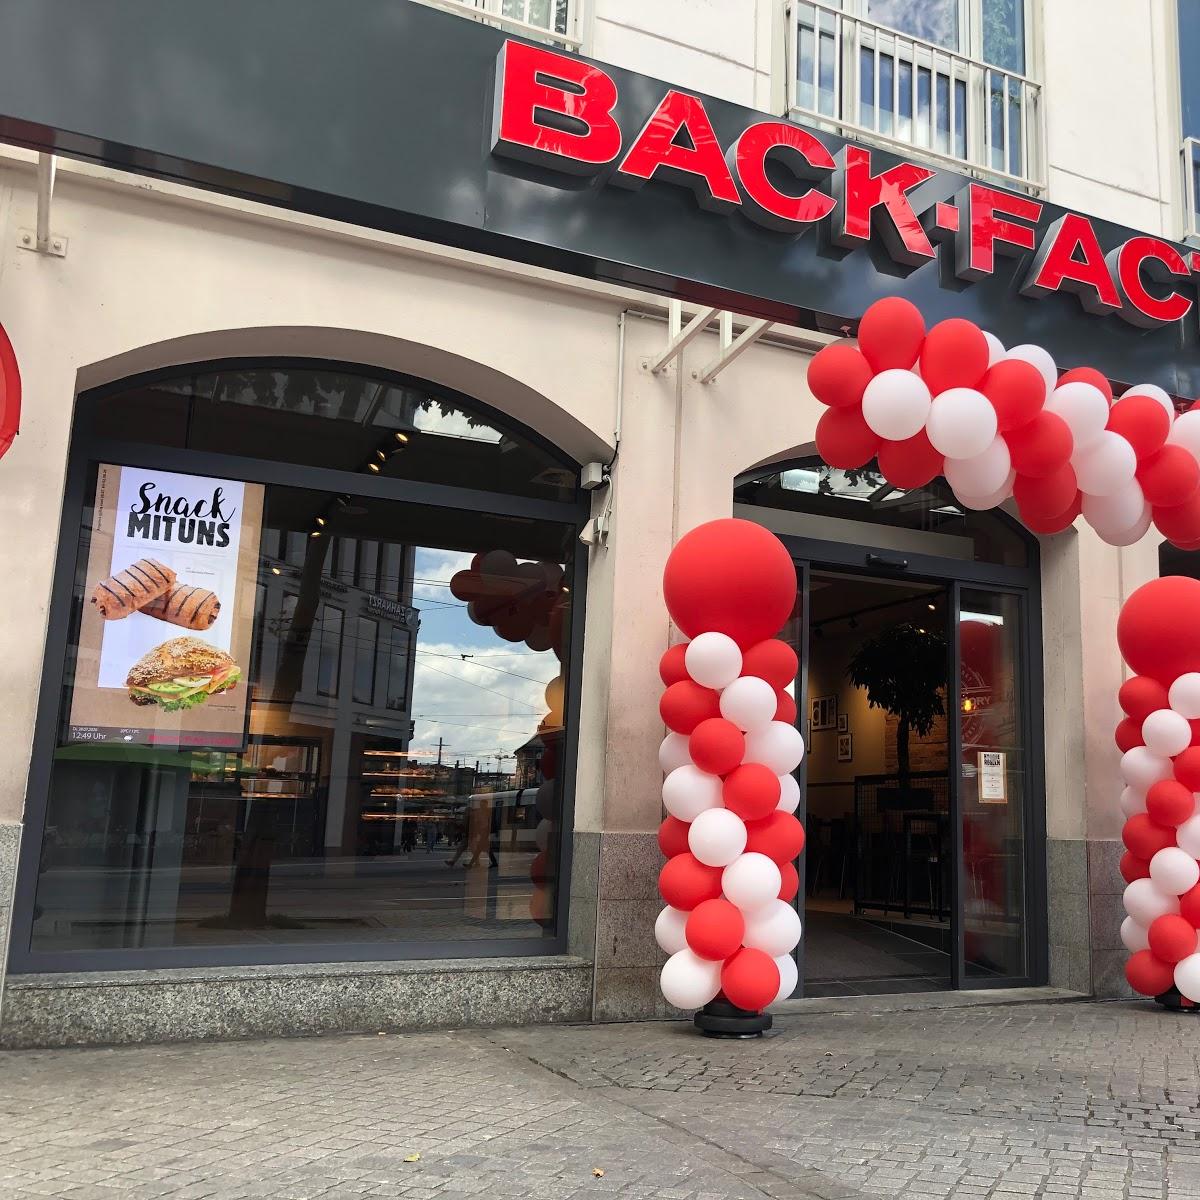 Restaurant "BACK-FACTORY" in Bremen